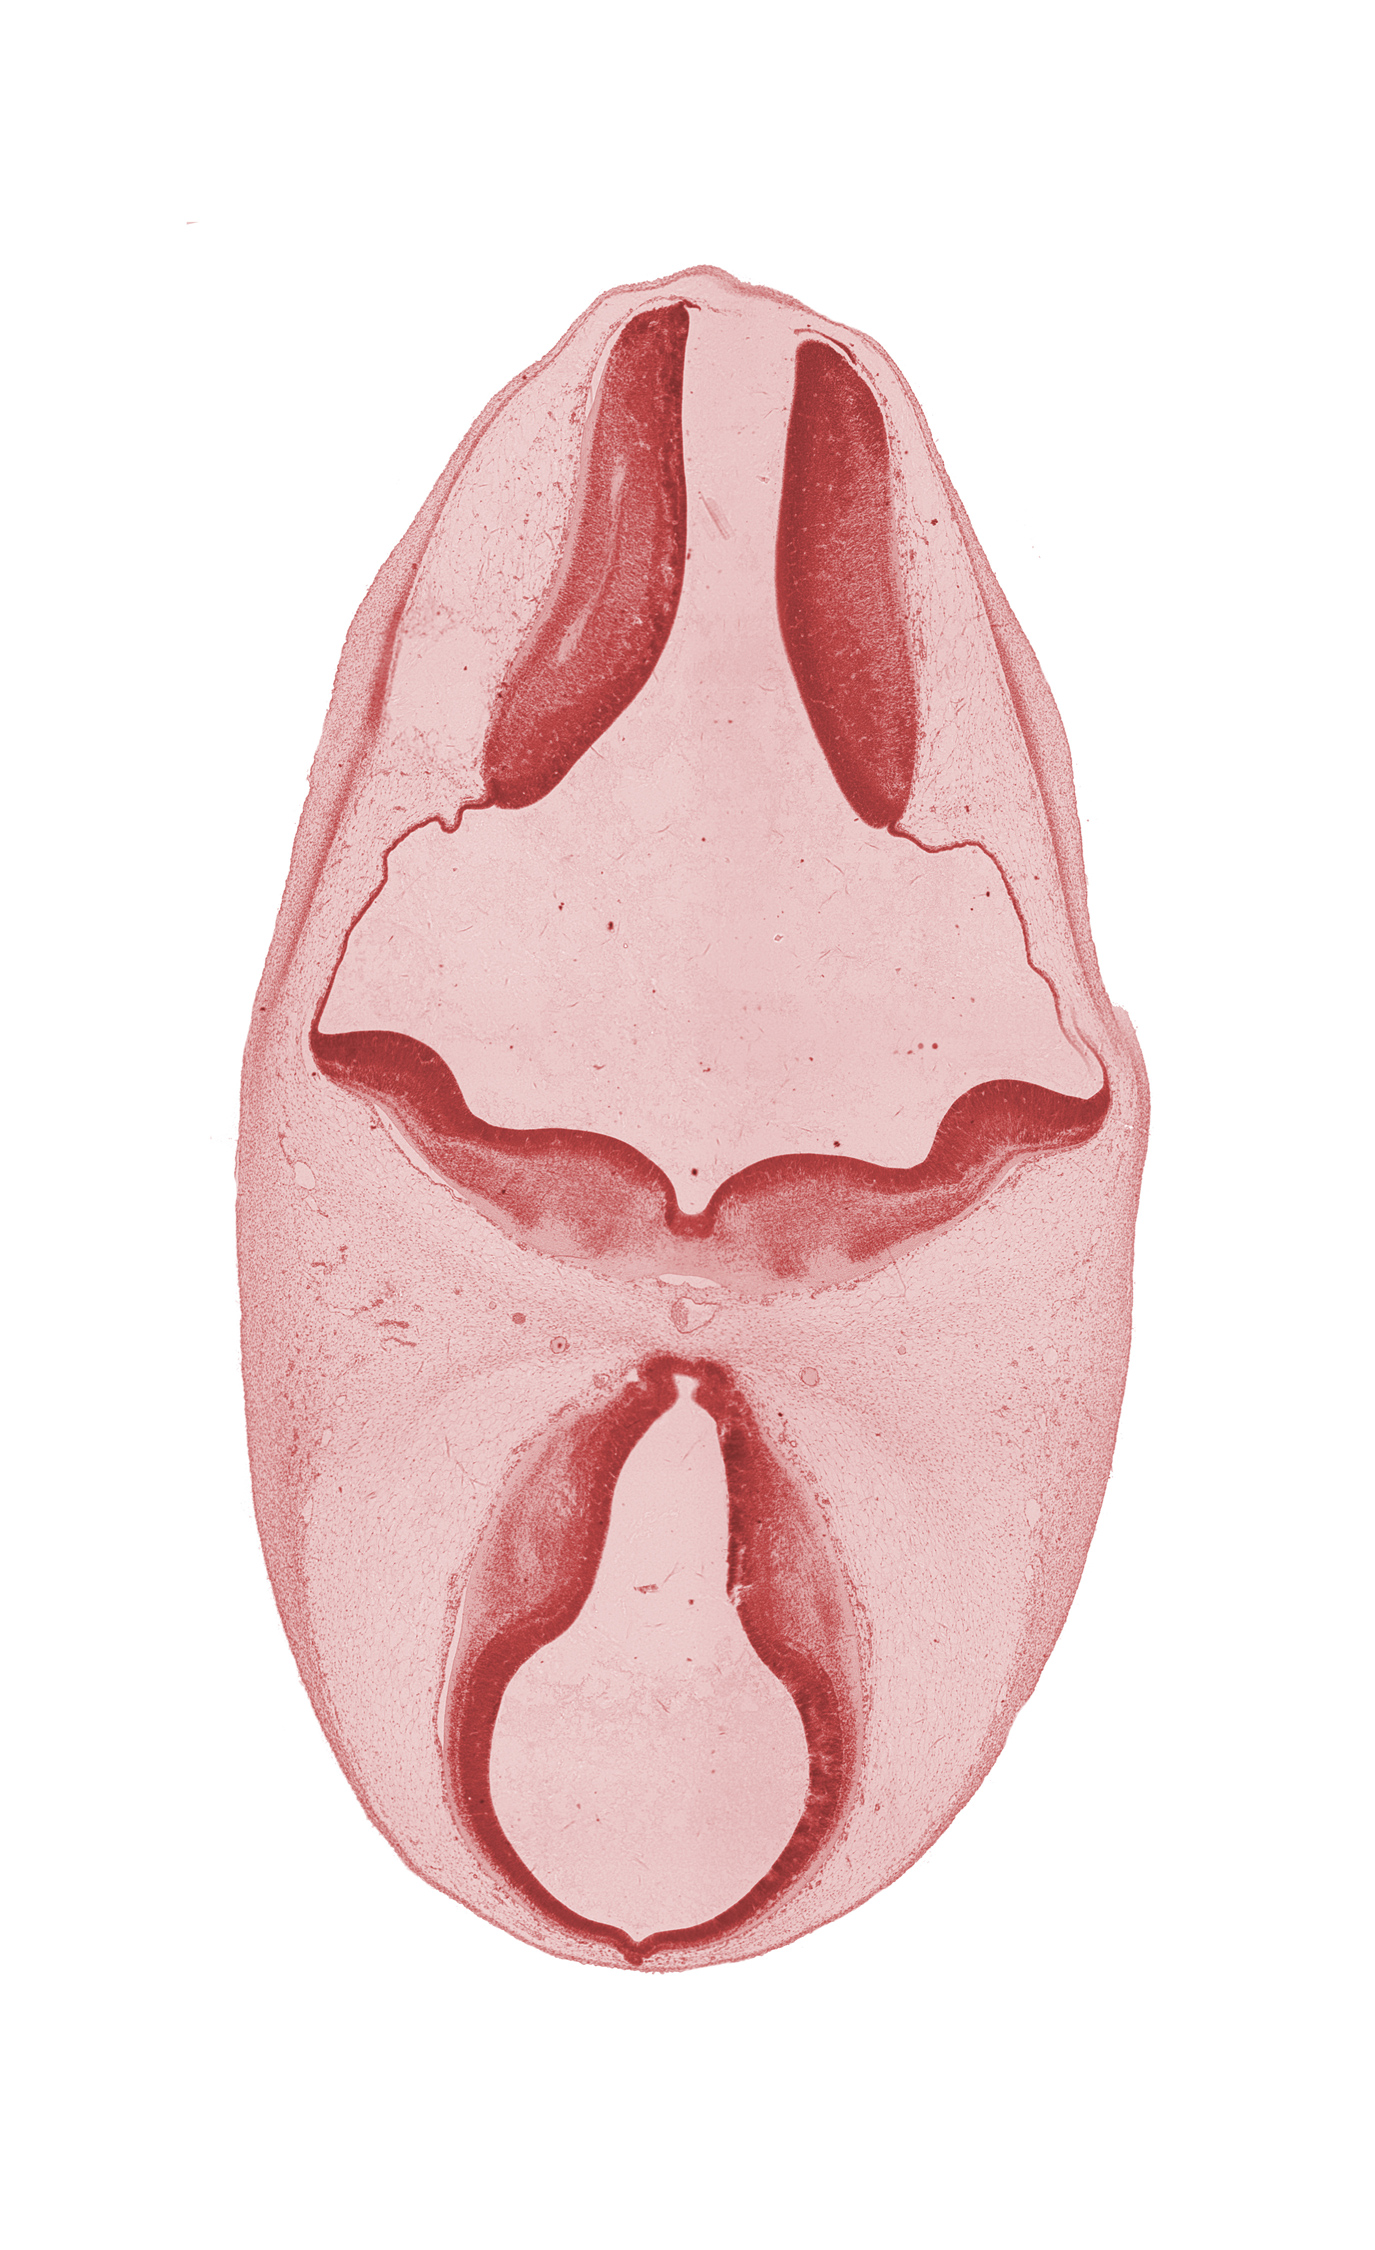 alar plate of metencephalon (cerebellum), artifact separation(s), basilar artery, basilar pons, mamillary recess, oculomotor nerve (CN III), pineal bud, rhombencoel (fourth ventricle), roof plate, third ventricle, trochlear nerve (CN IV)